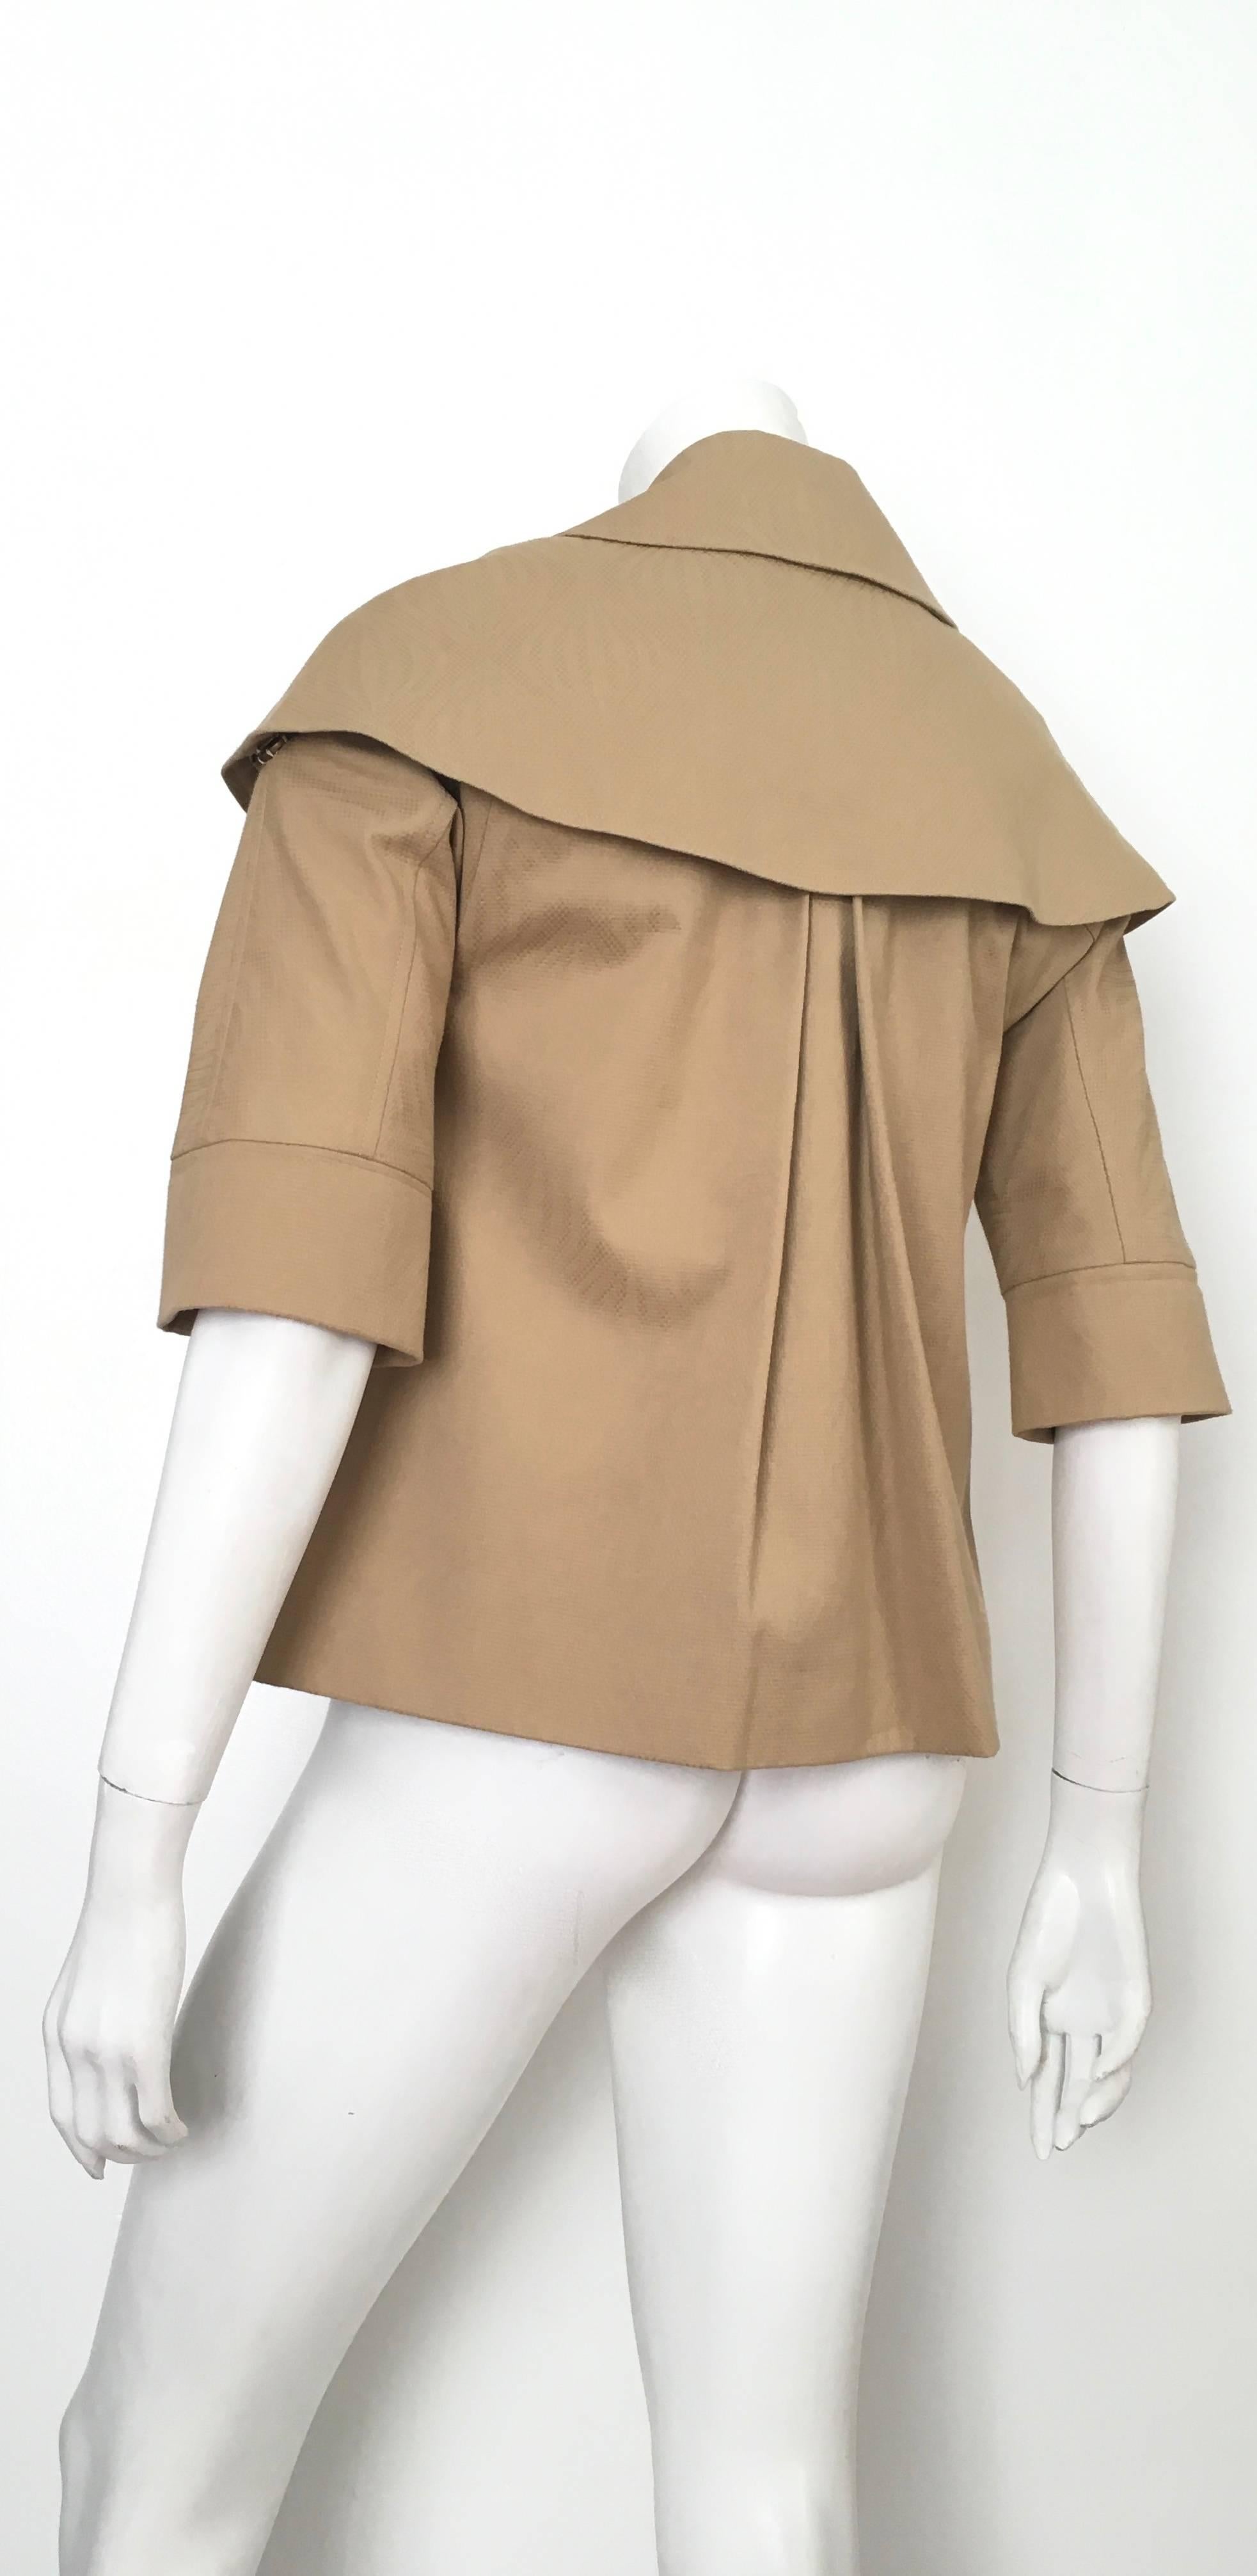 Women's or Men's Lela Rose Tan Caped Swing Jacket Size 4. Never Worn. For Sale